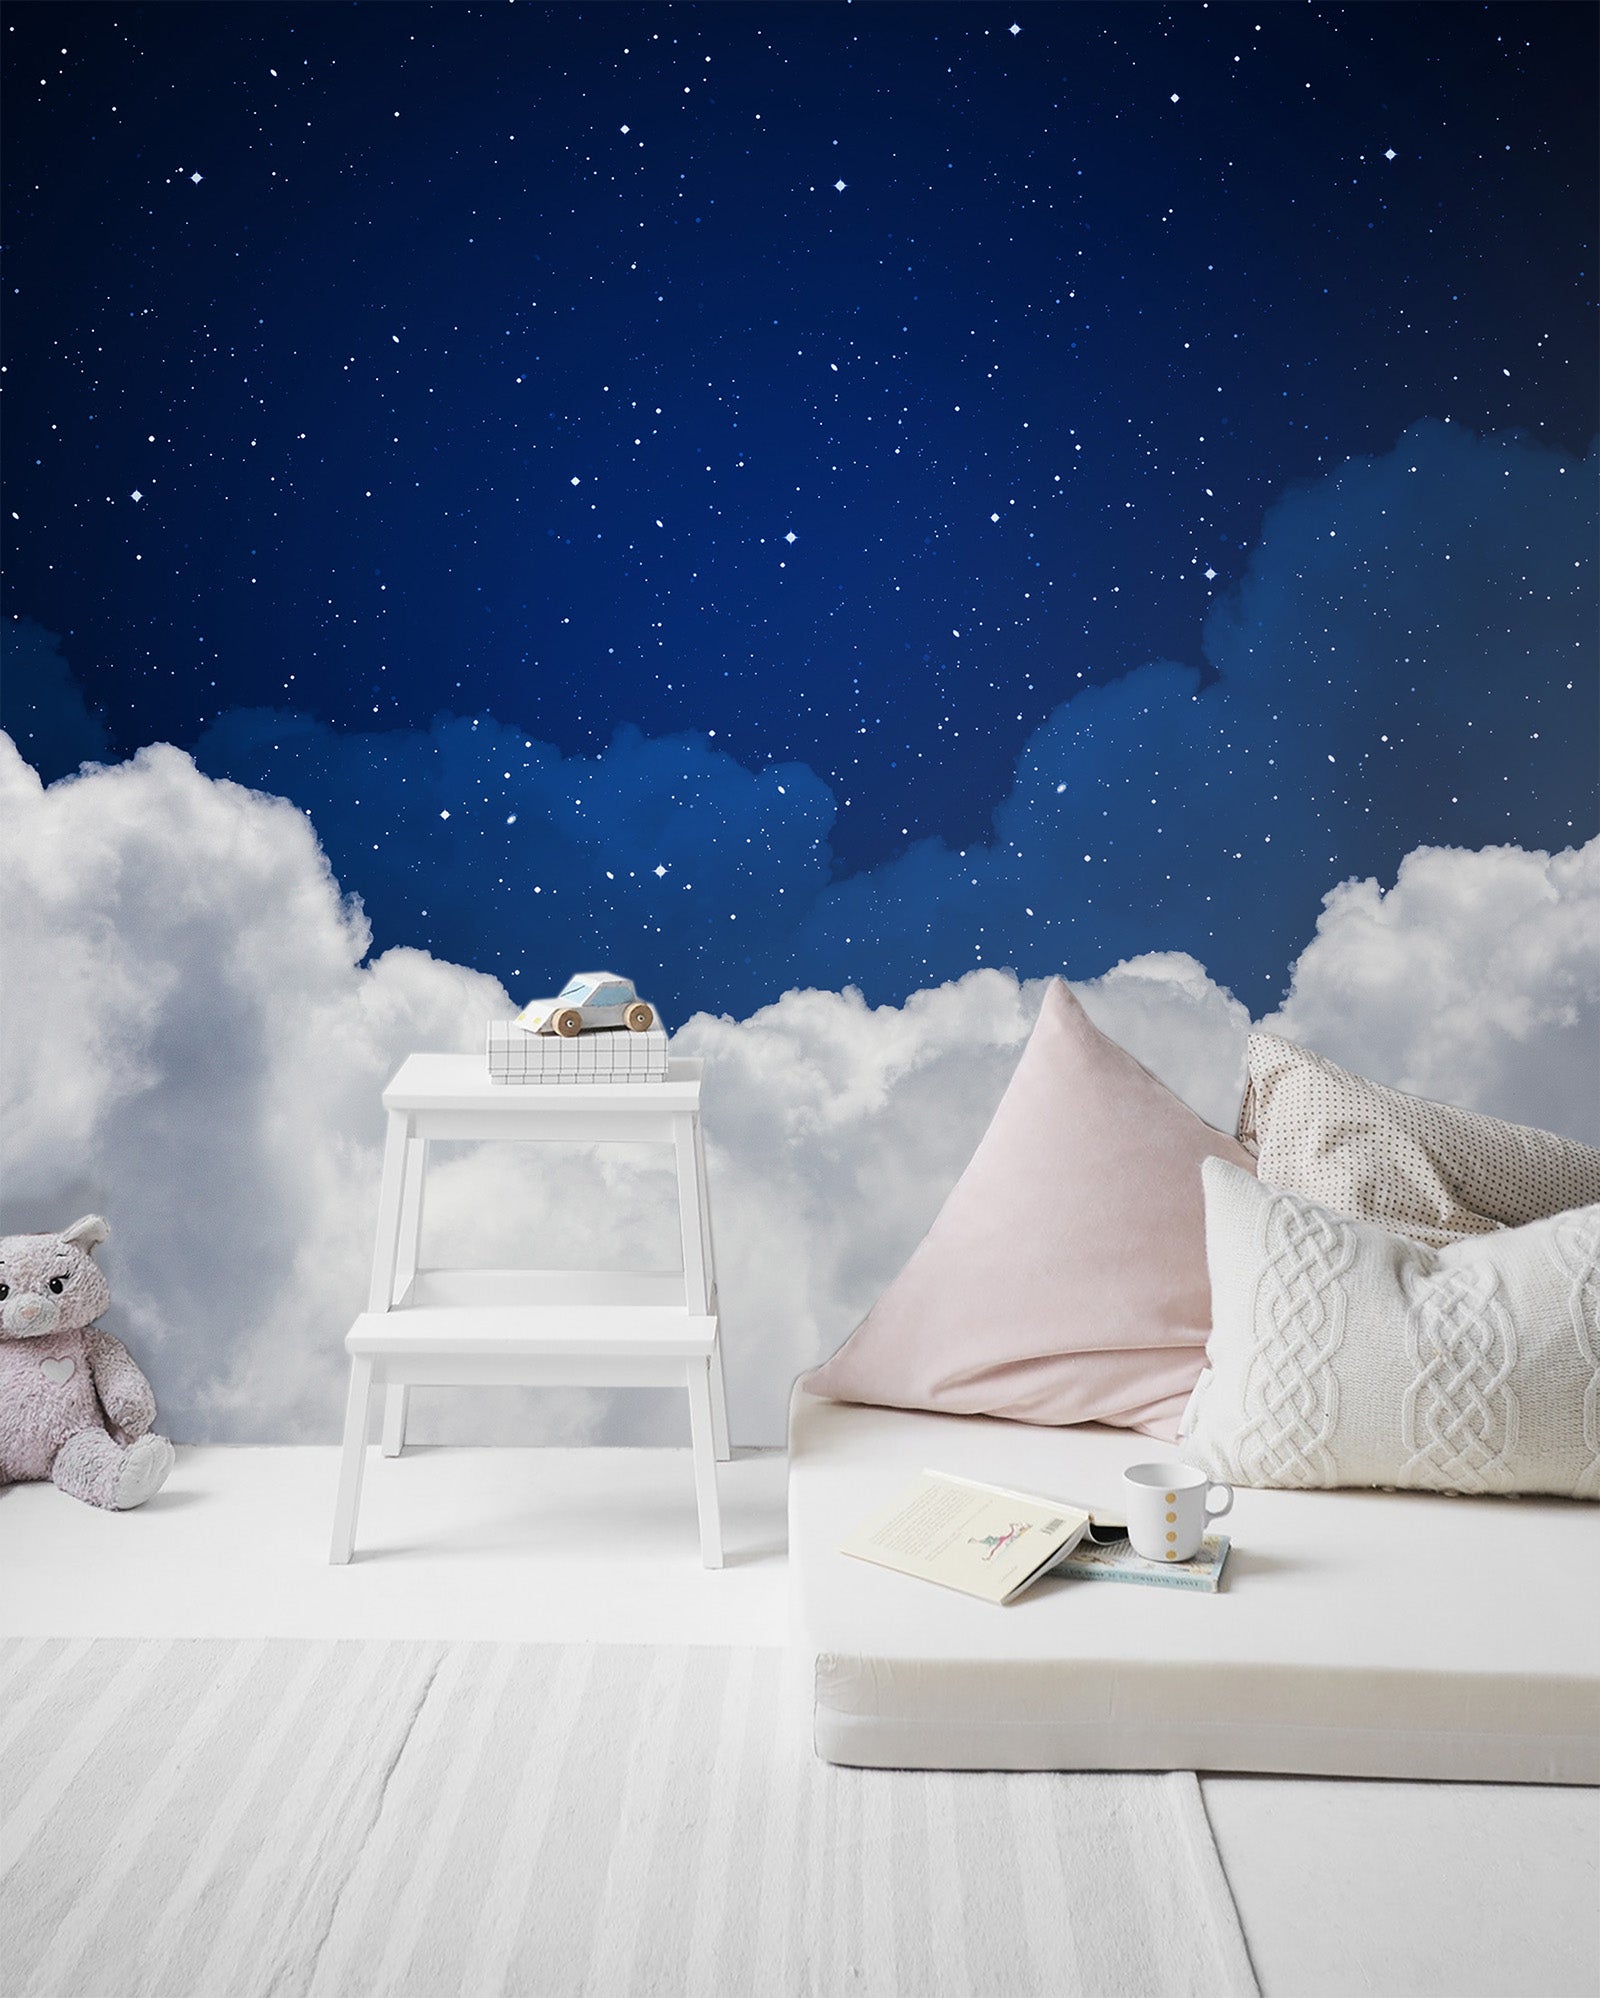 3D White Clouds Night Sky 002 Wall Murals